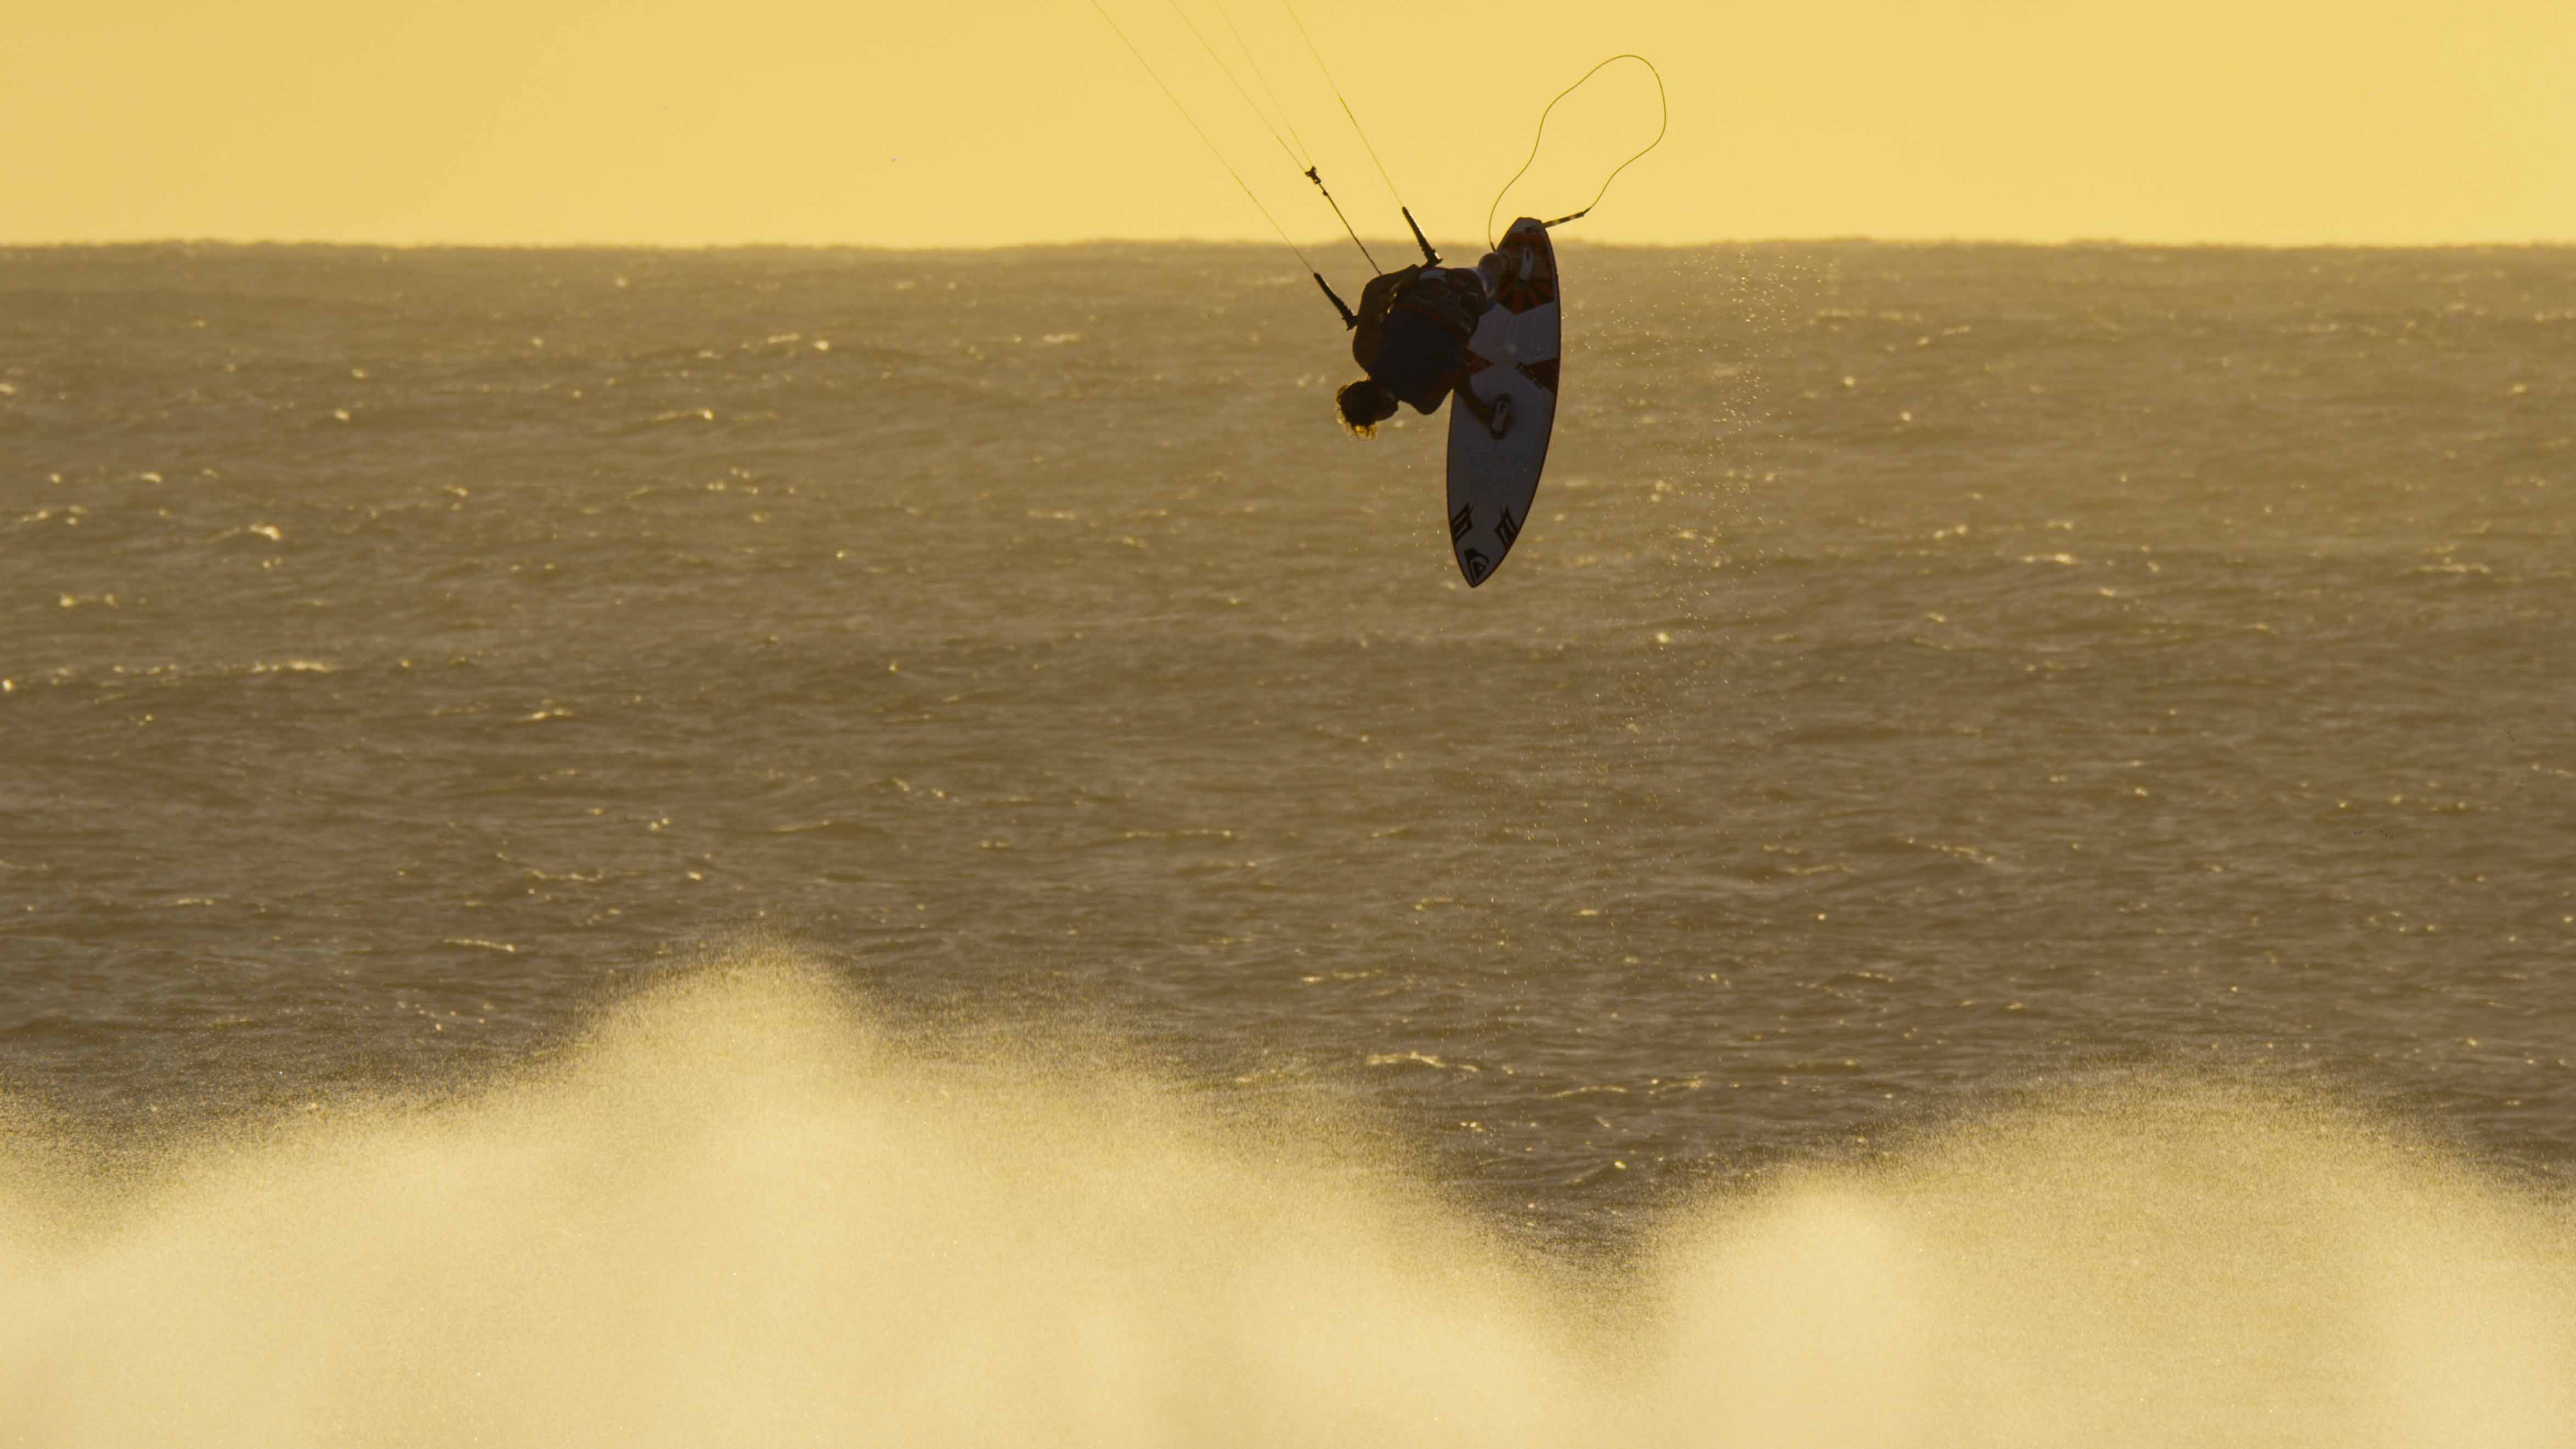 Windsurfing legend and kiteboarding pioneer Robby Naish scores at cloudbreak, fiji.jpg